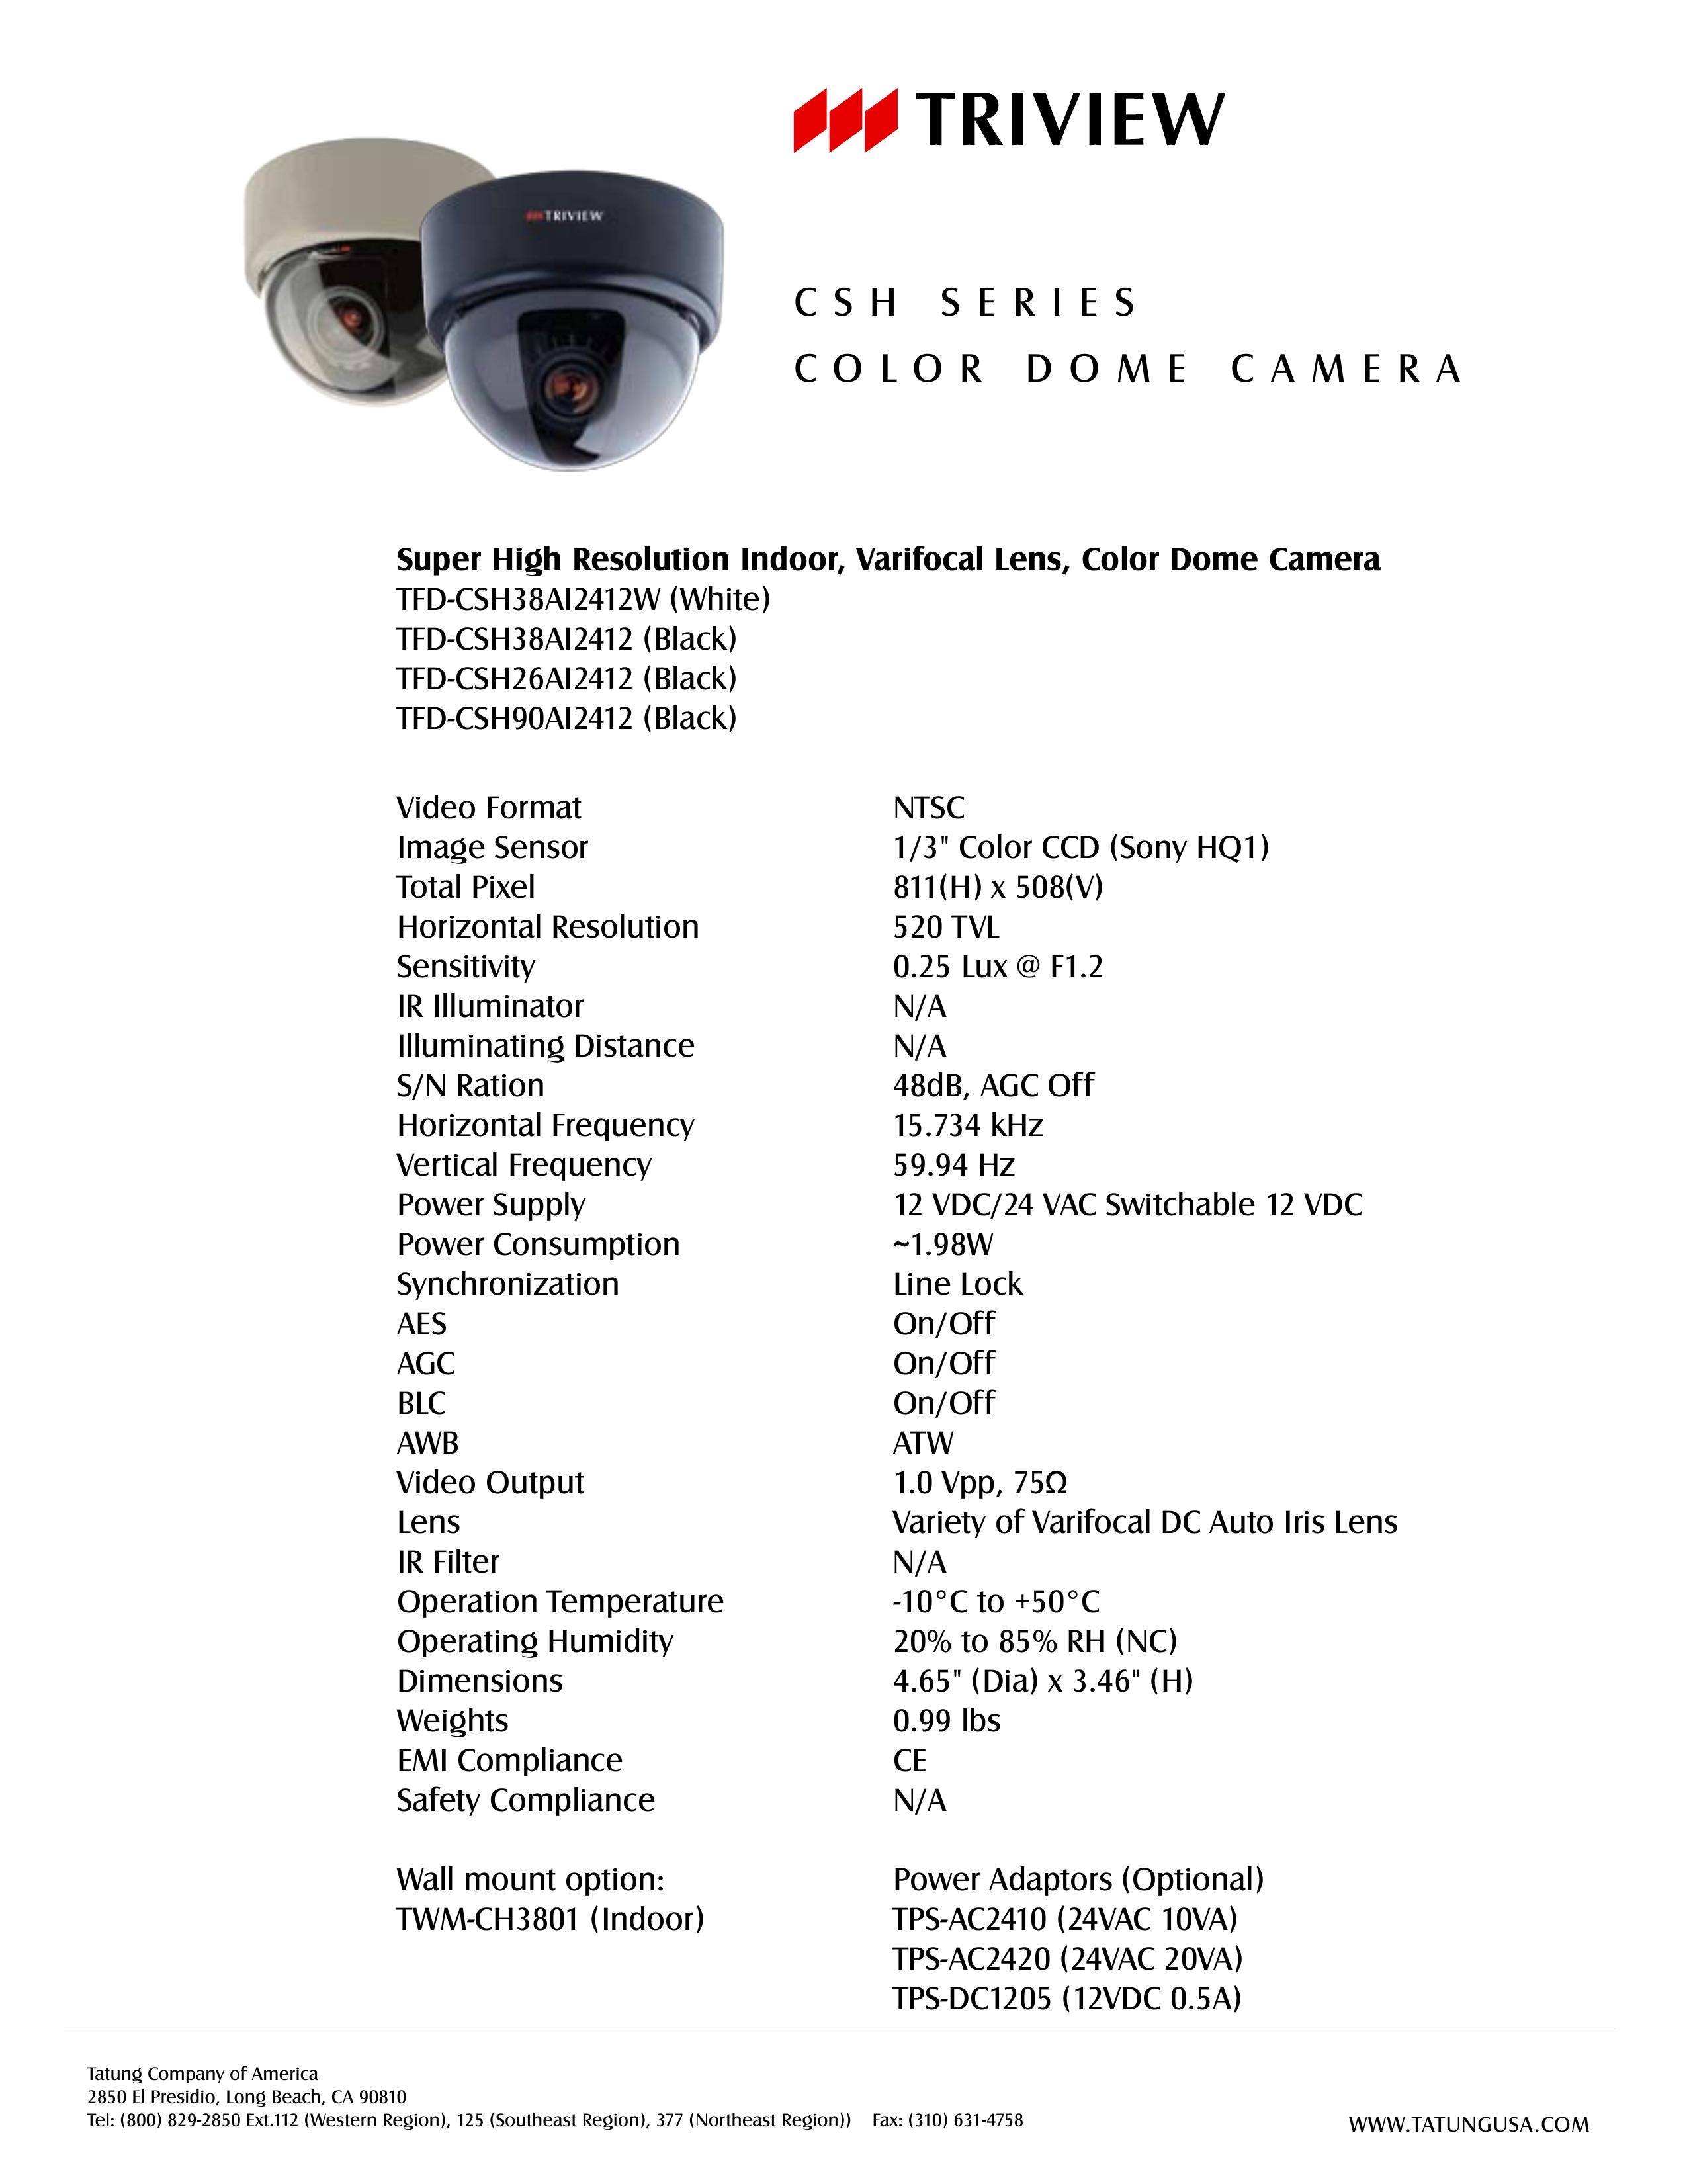 Tatung TFD-CSH38AI2412W Security Camera User Manual